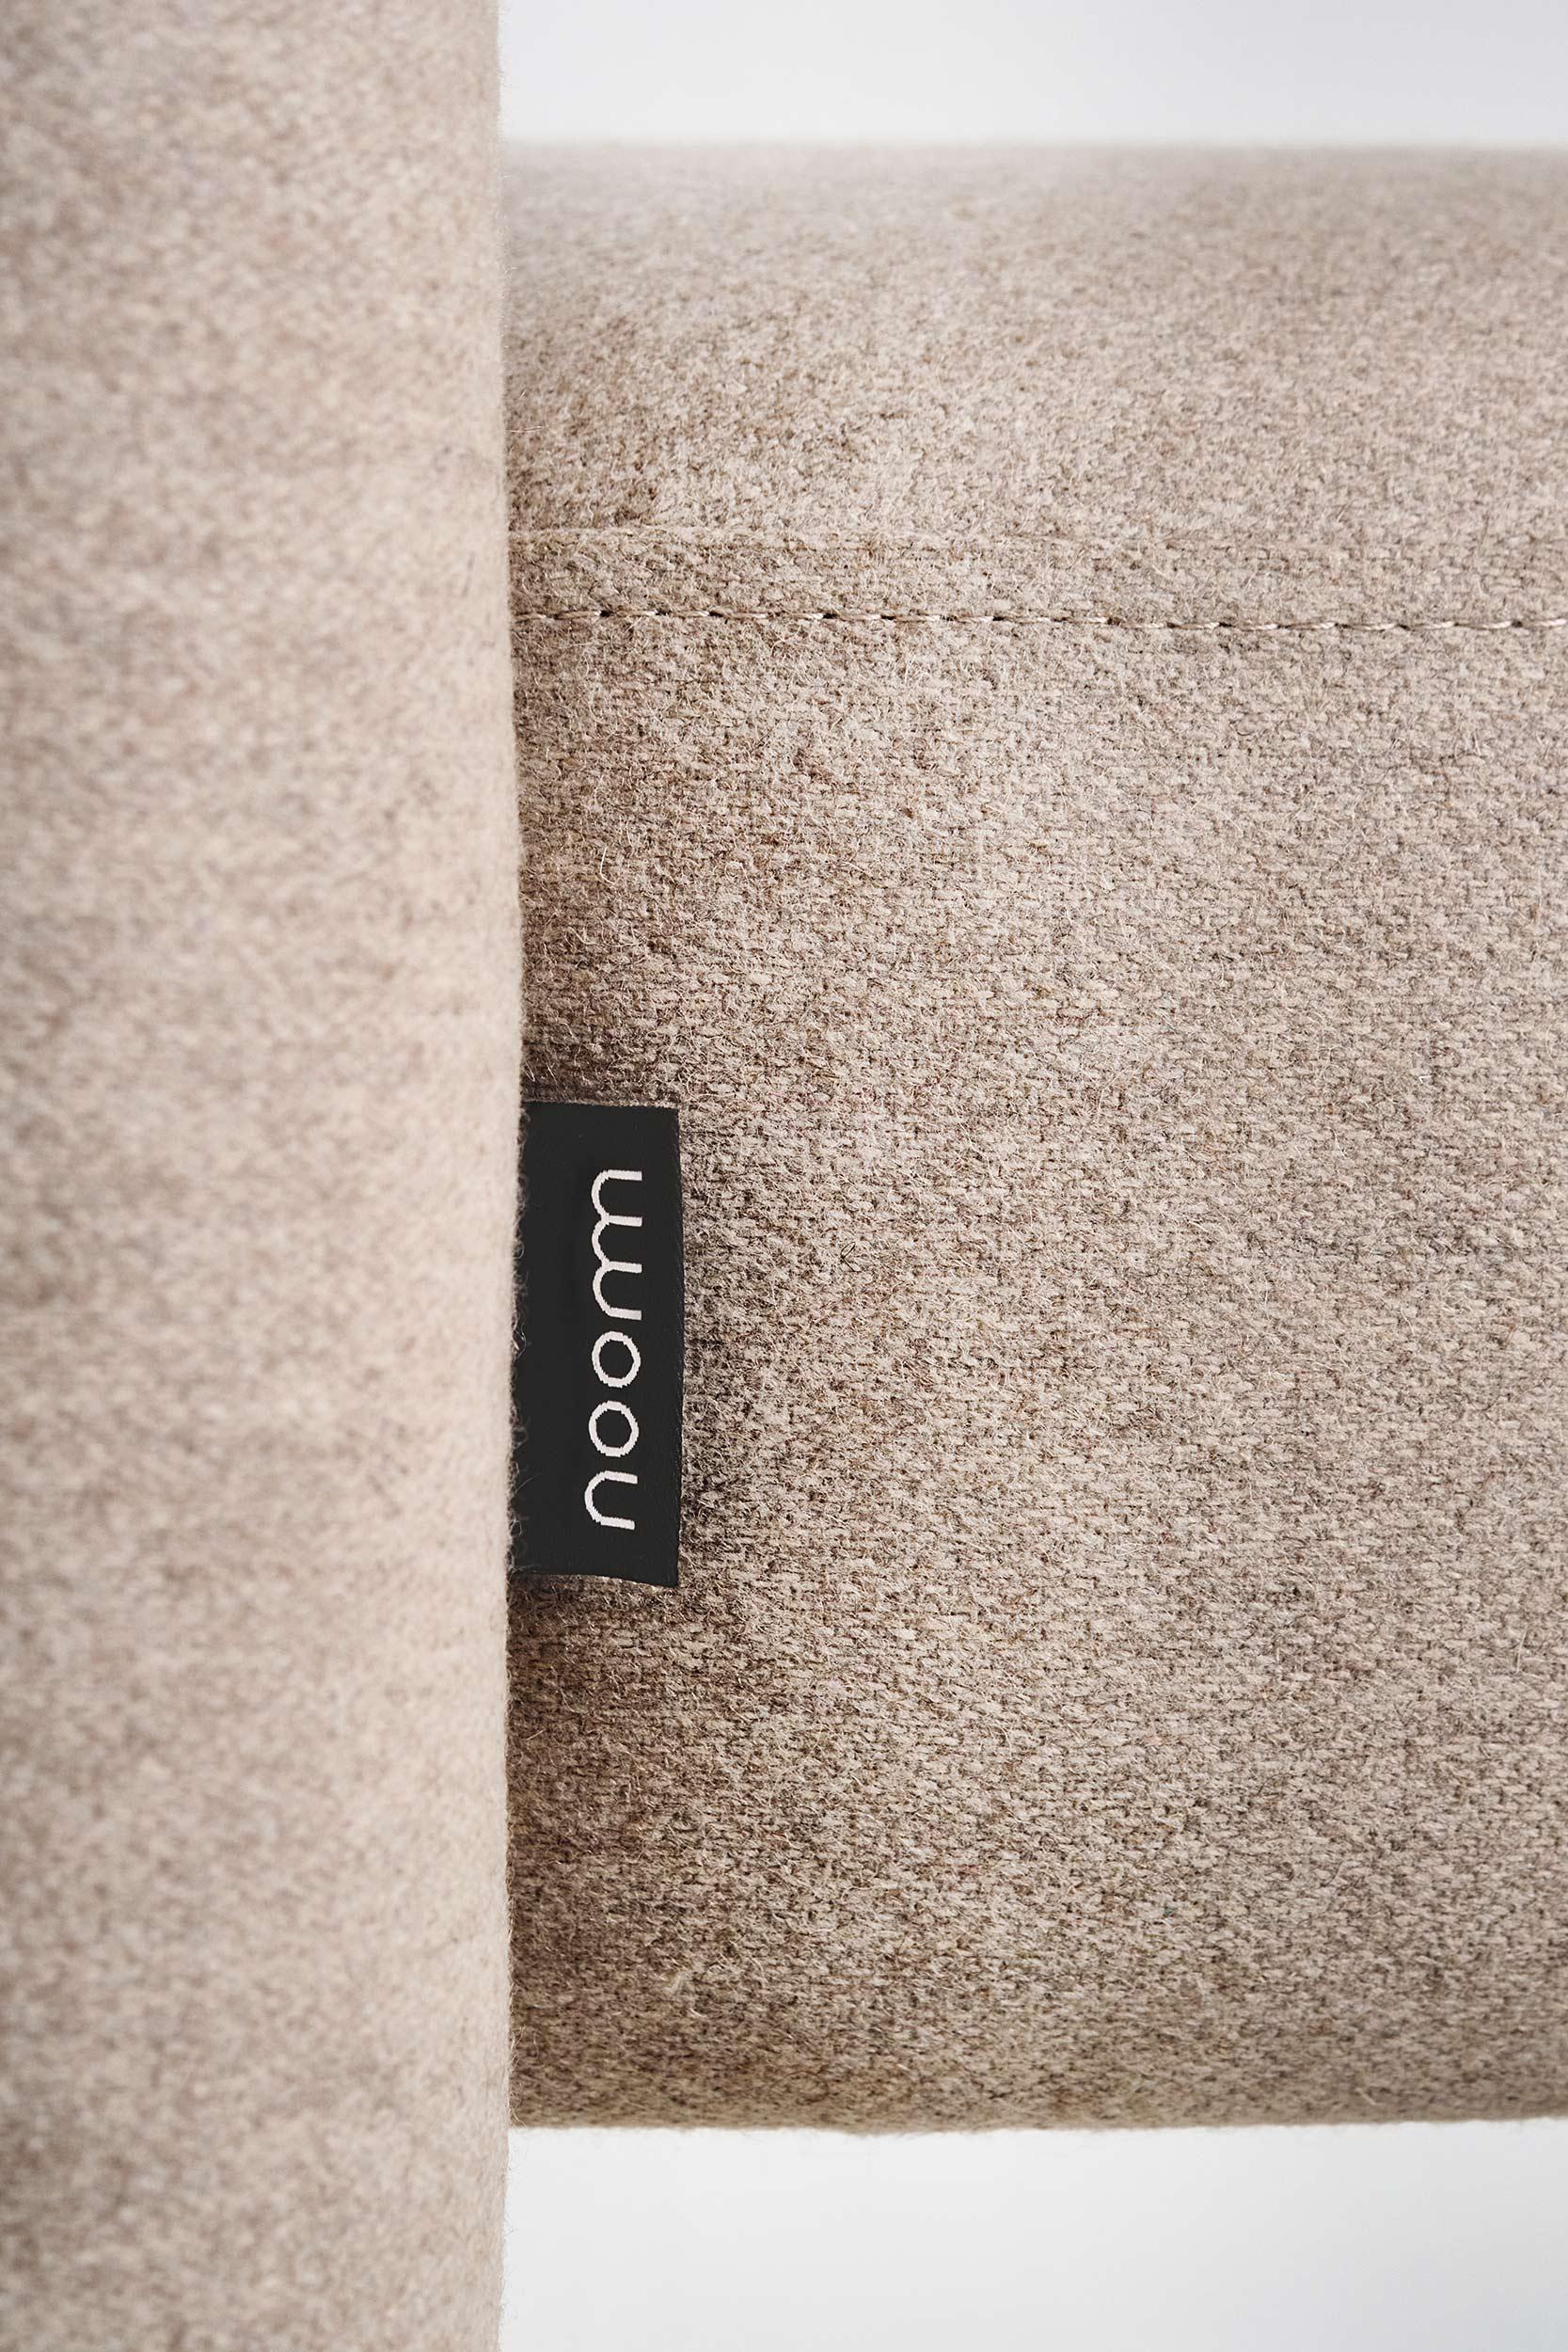 Modern Sofa Gropius CS1 in Wool Fabric by Noom For Sale 8